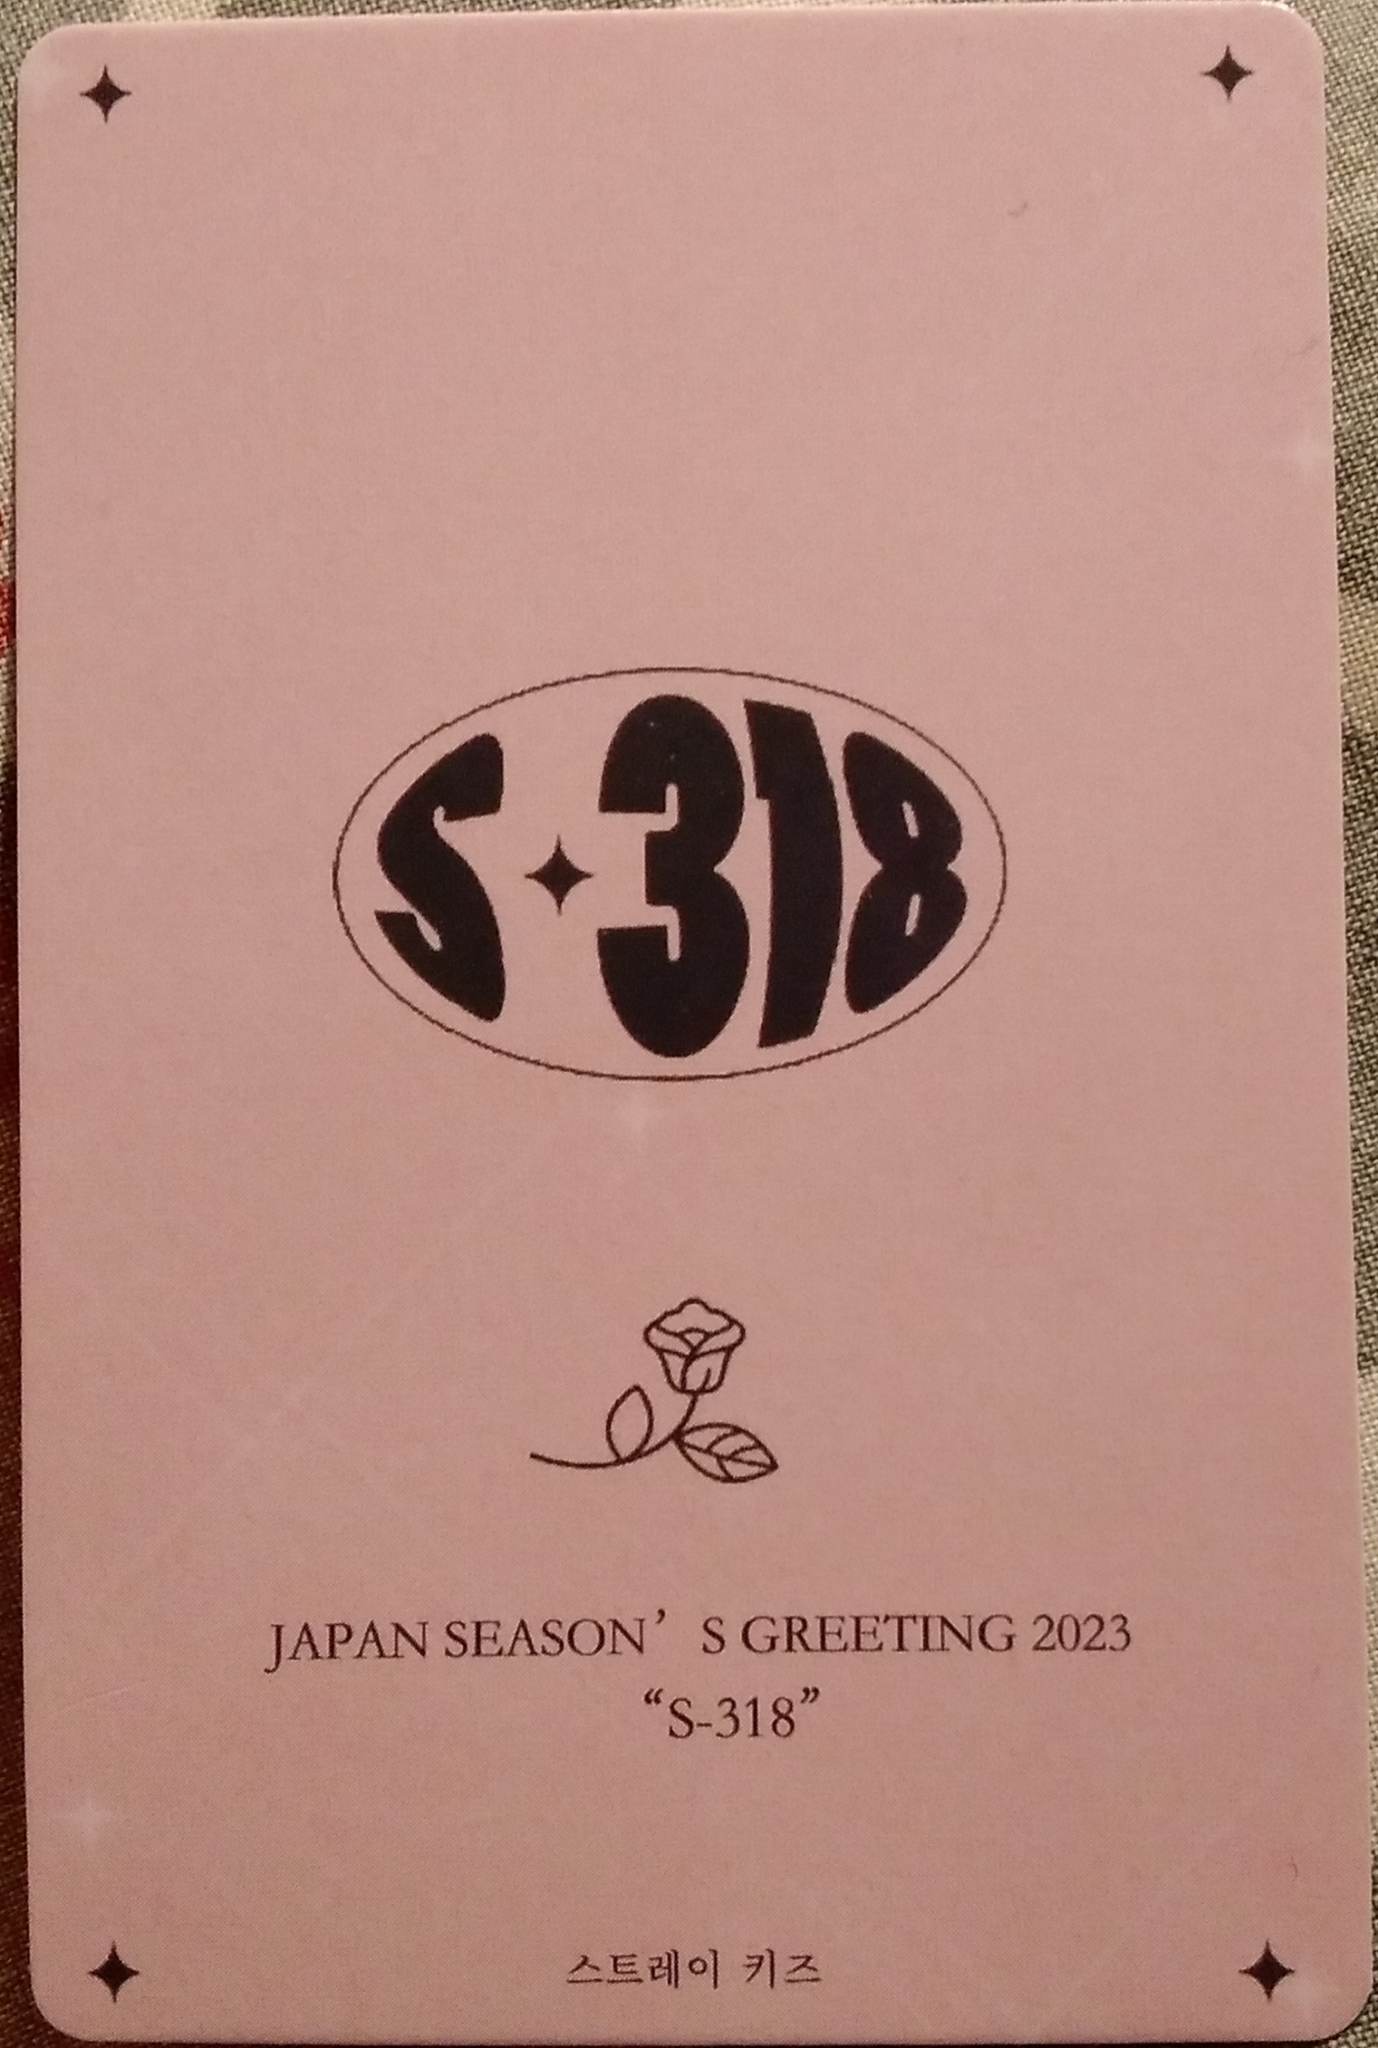 Photocard  STRAYKIDS  Japan season s greetings 2023  "S-318"  Jeong in